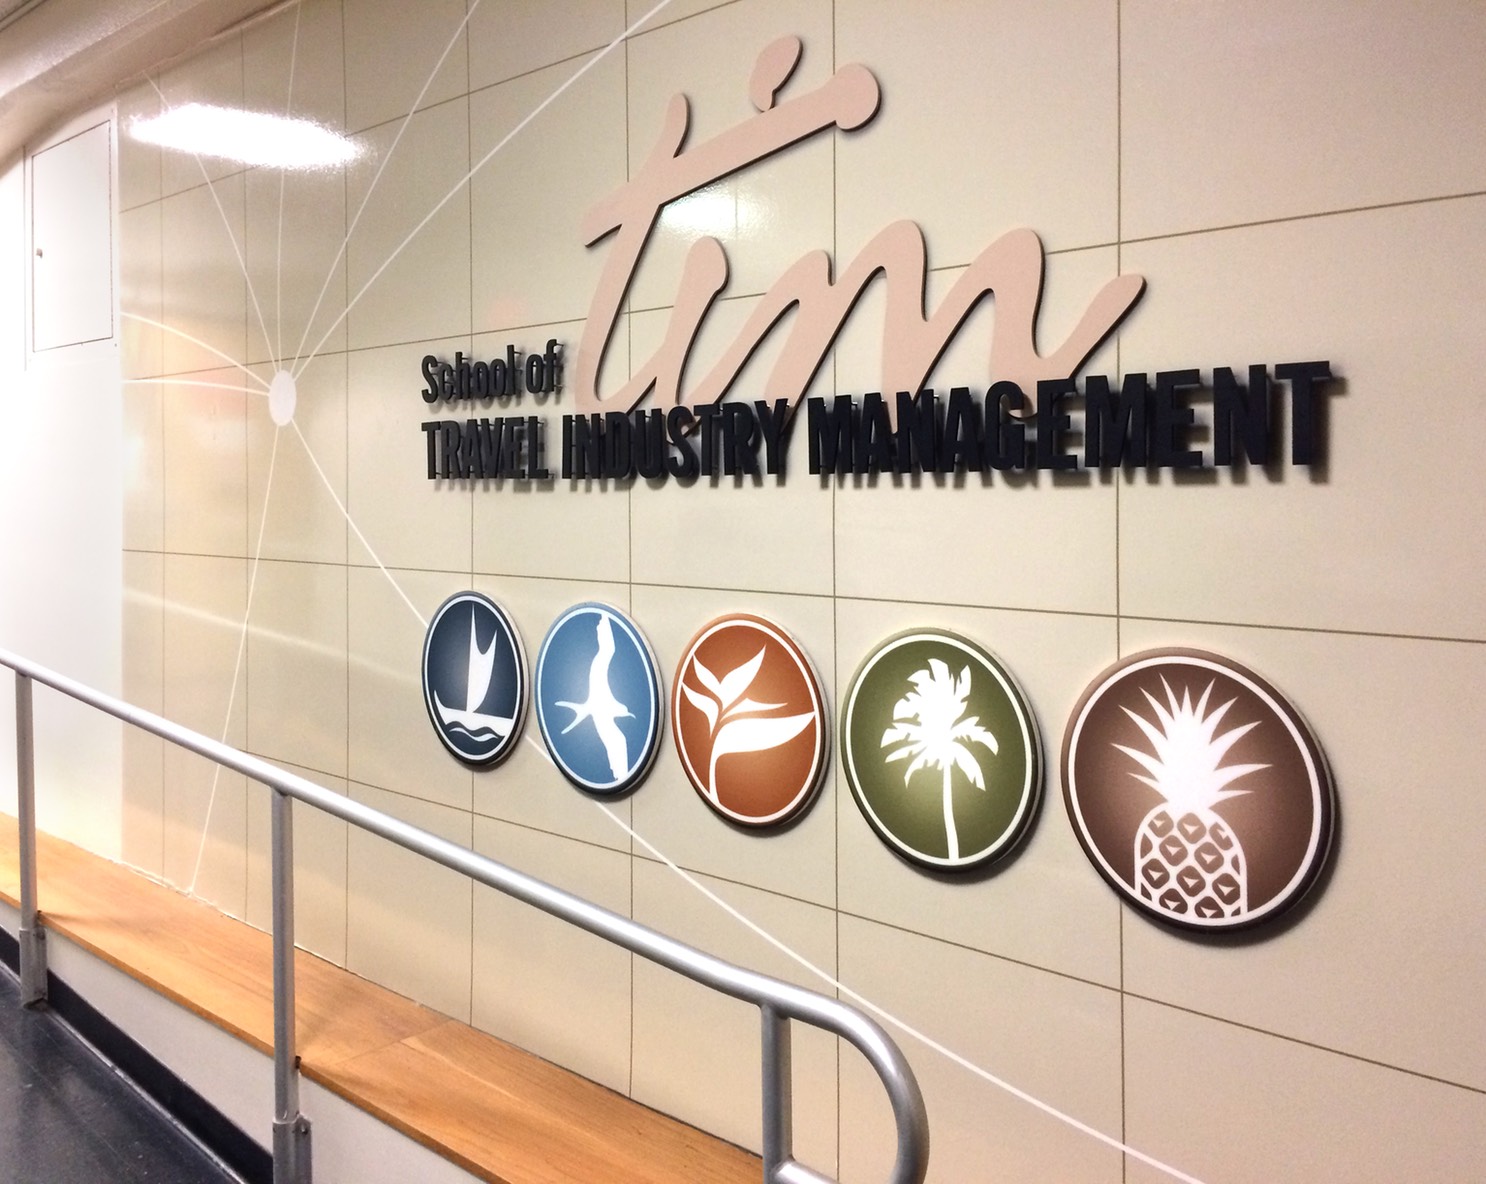 University Of Hawaii Tim School Of Travel Management Mural Sign